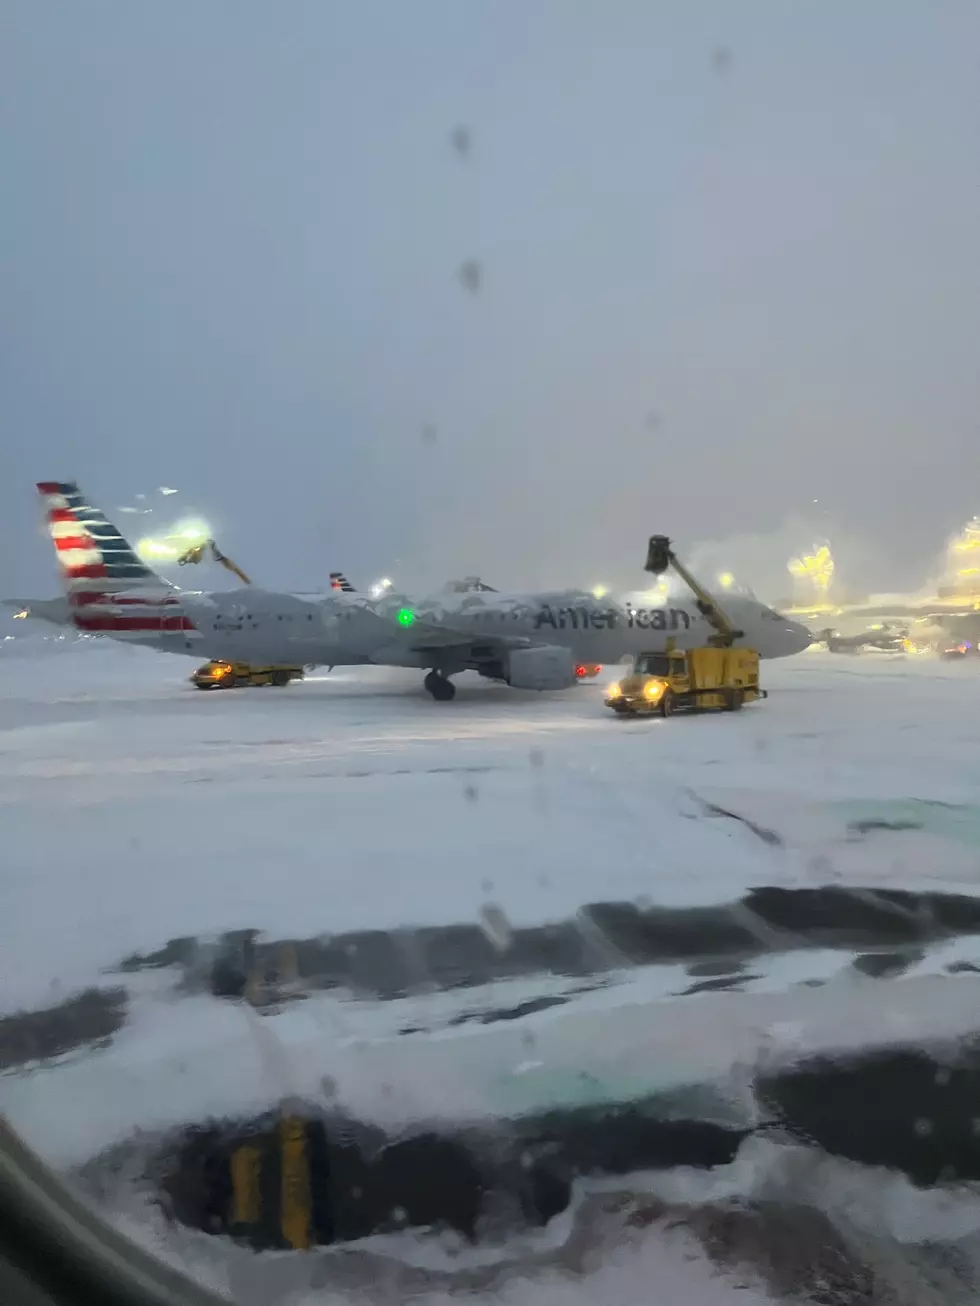 De-icing Planes In Massive Snowstorm In Buffalo, New York